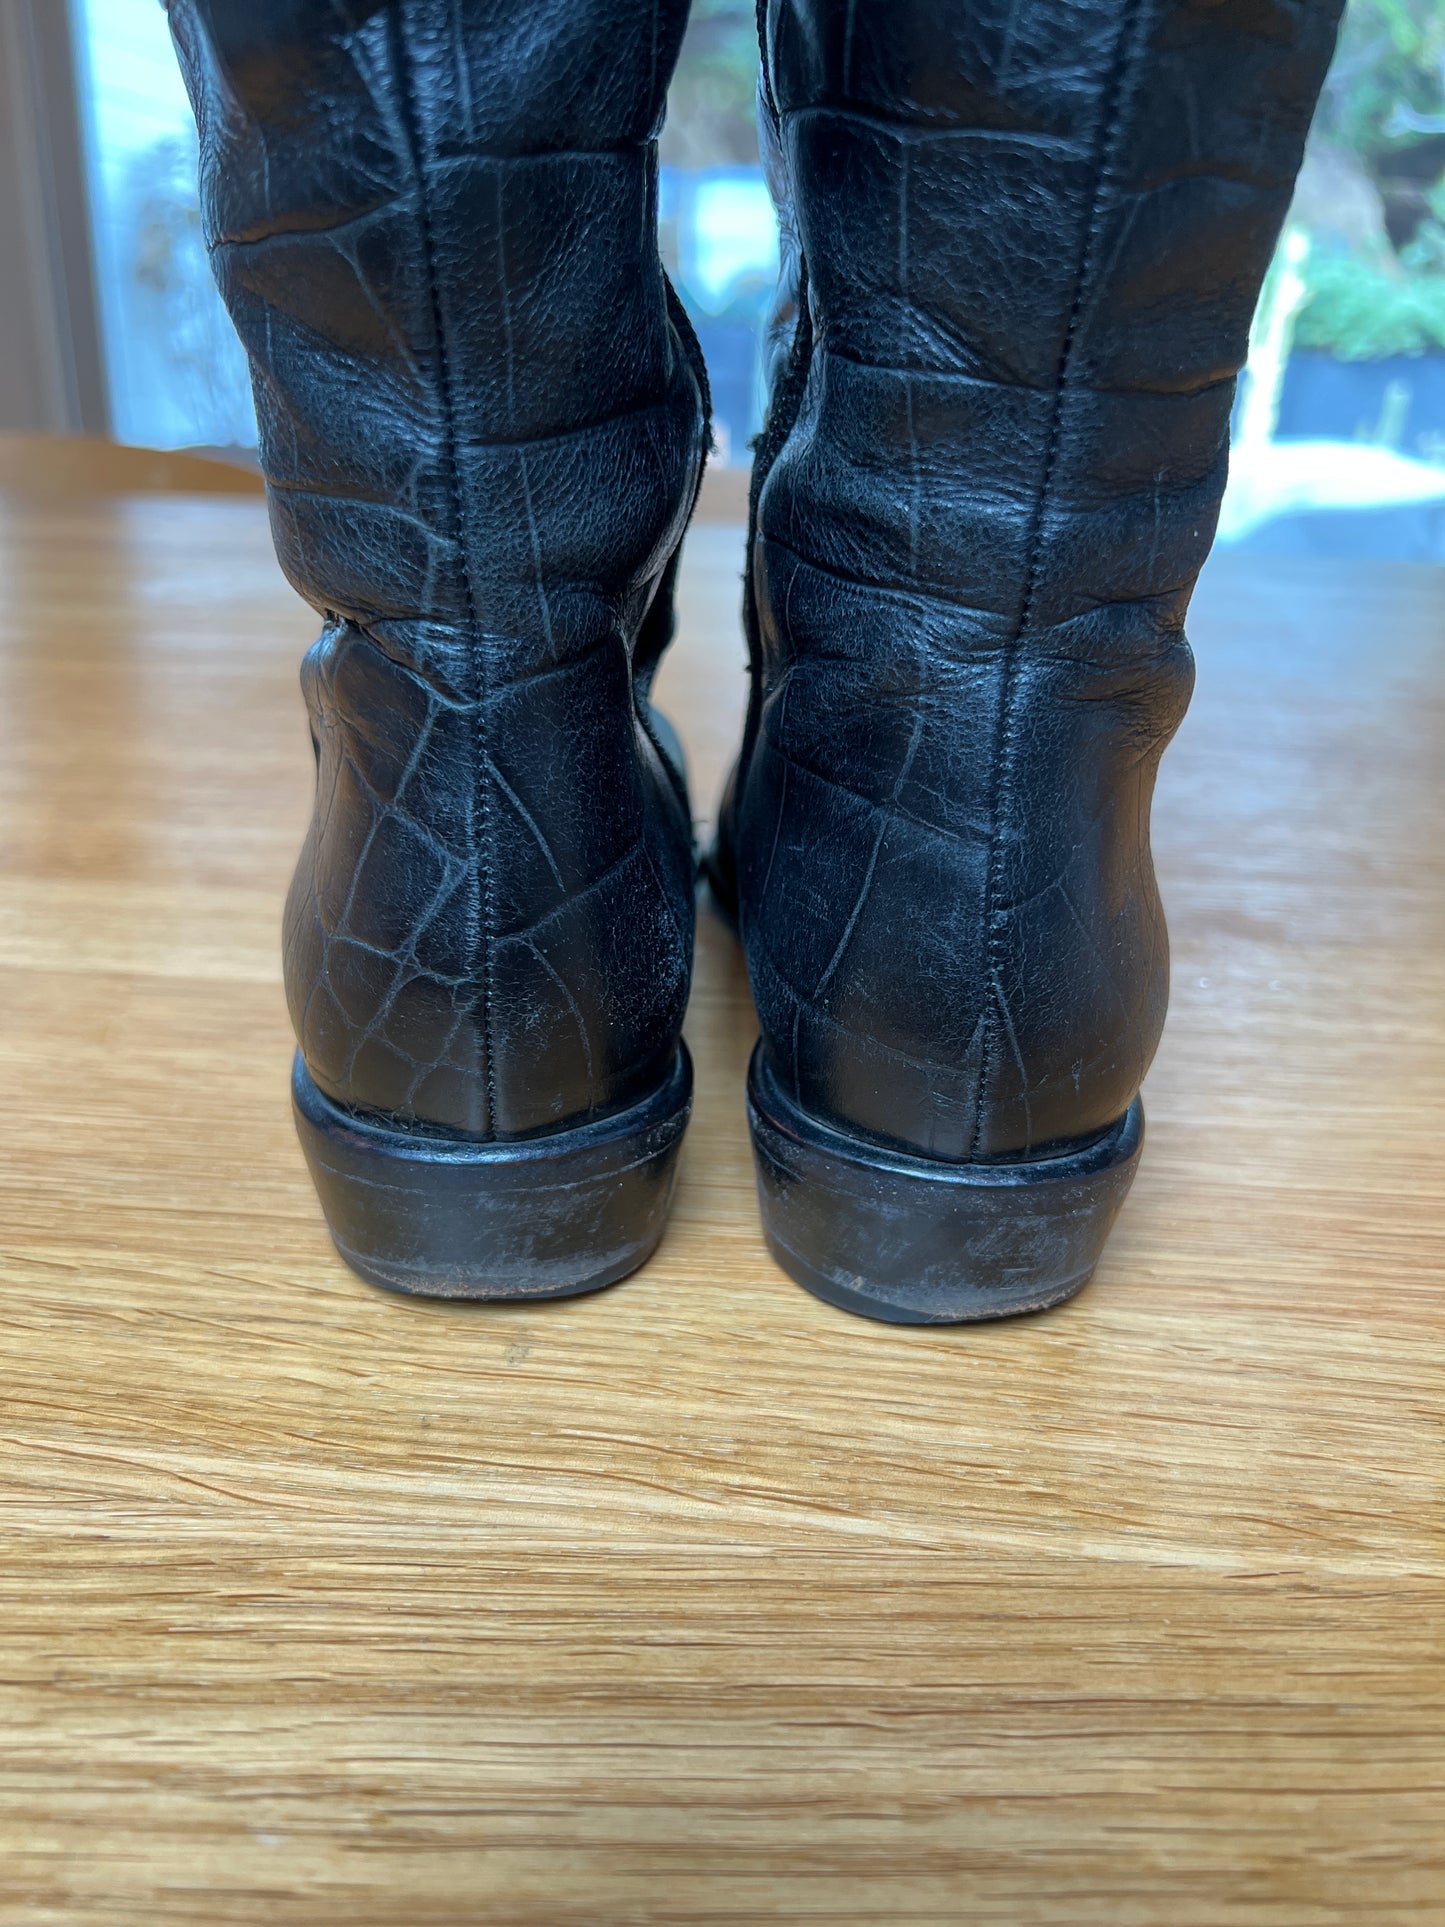 Tall Flat Italian Leather Boots - 7.5